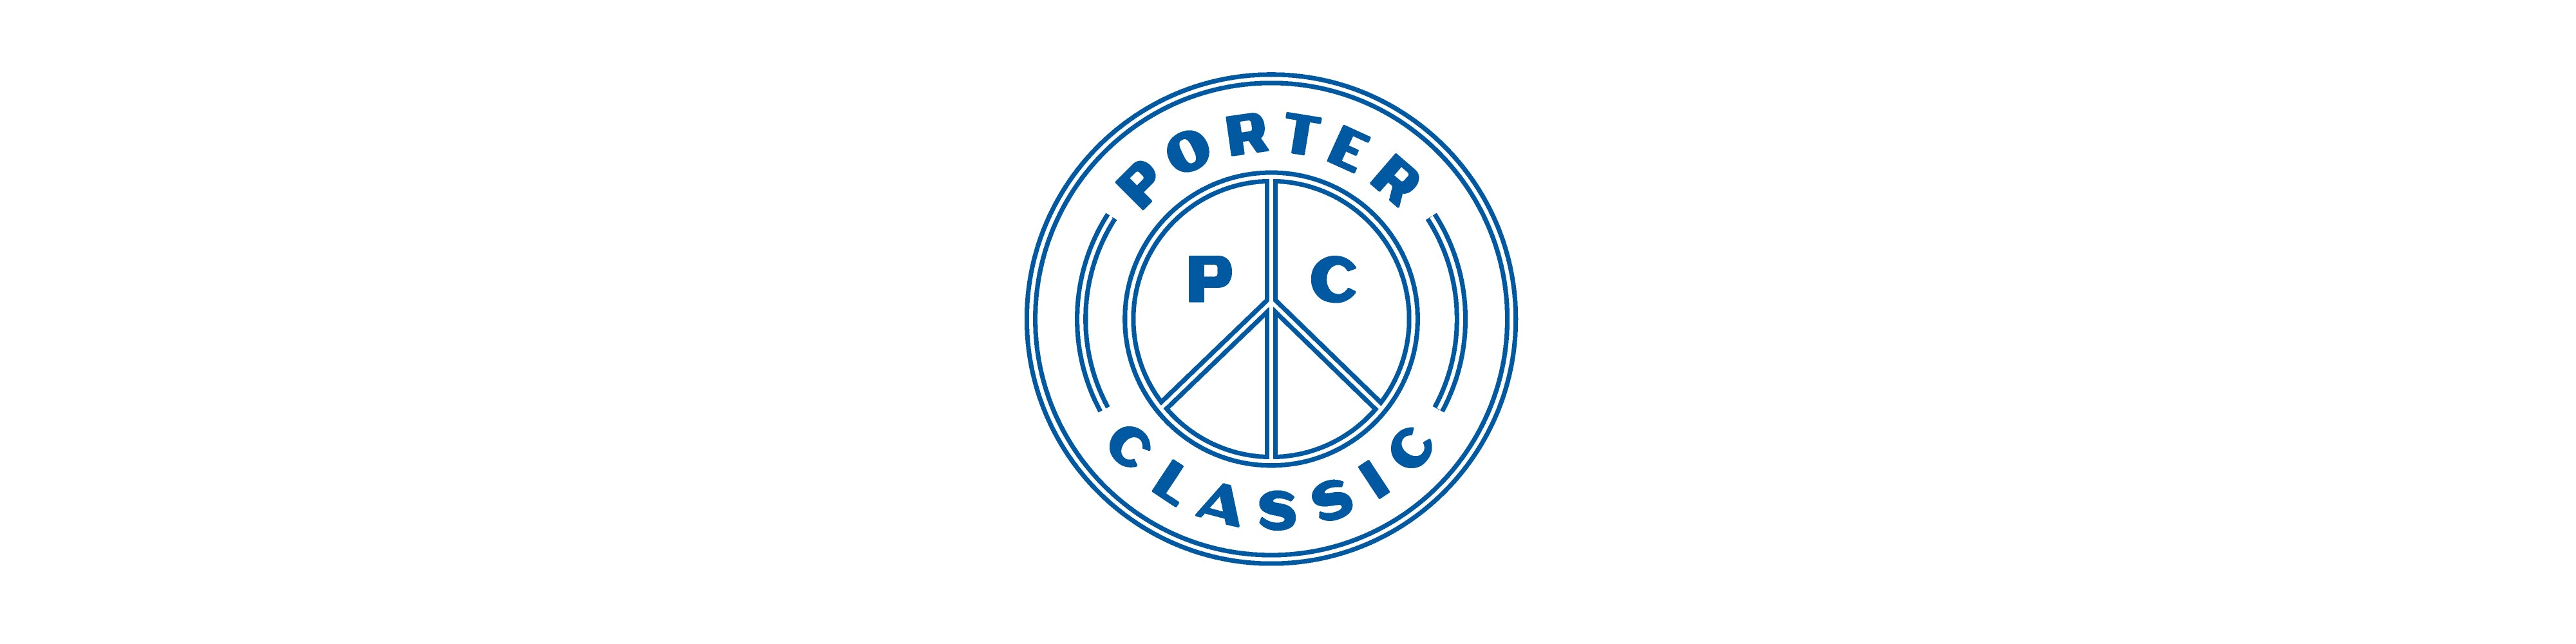 Porter Classic